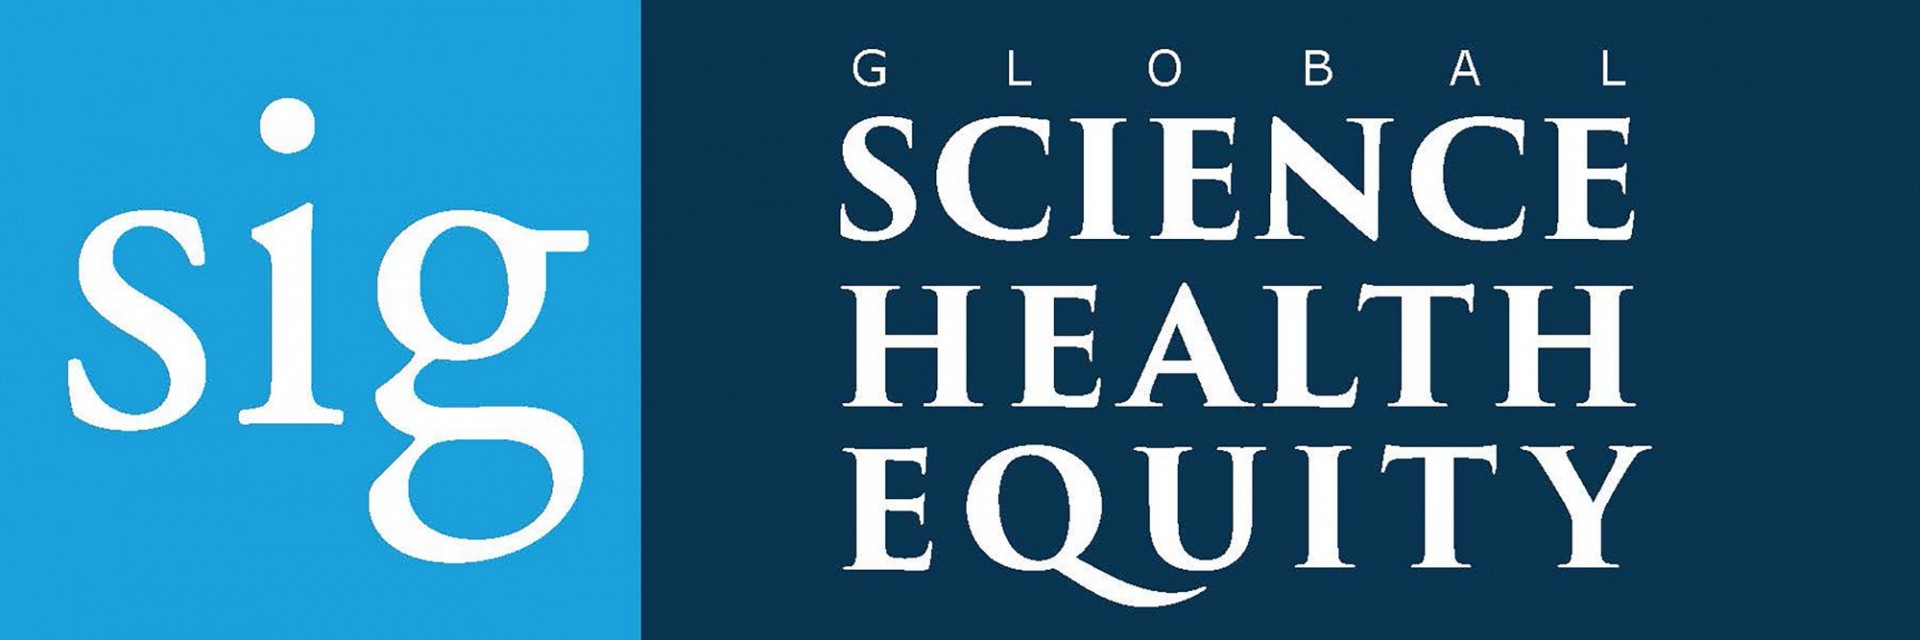 SIG logo + tagline: Science, Health, Equity